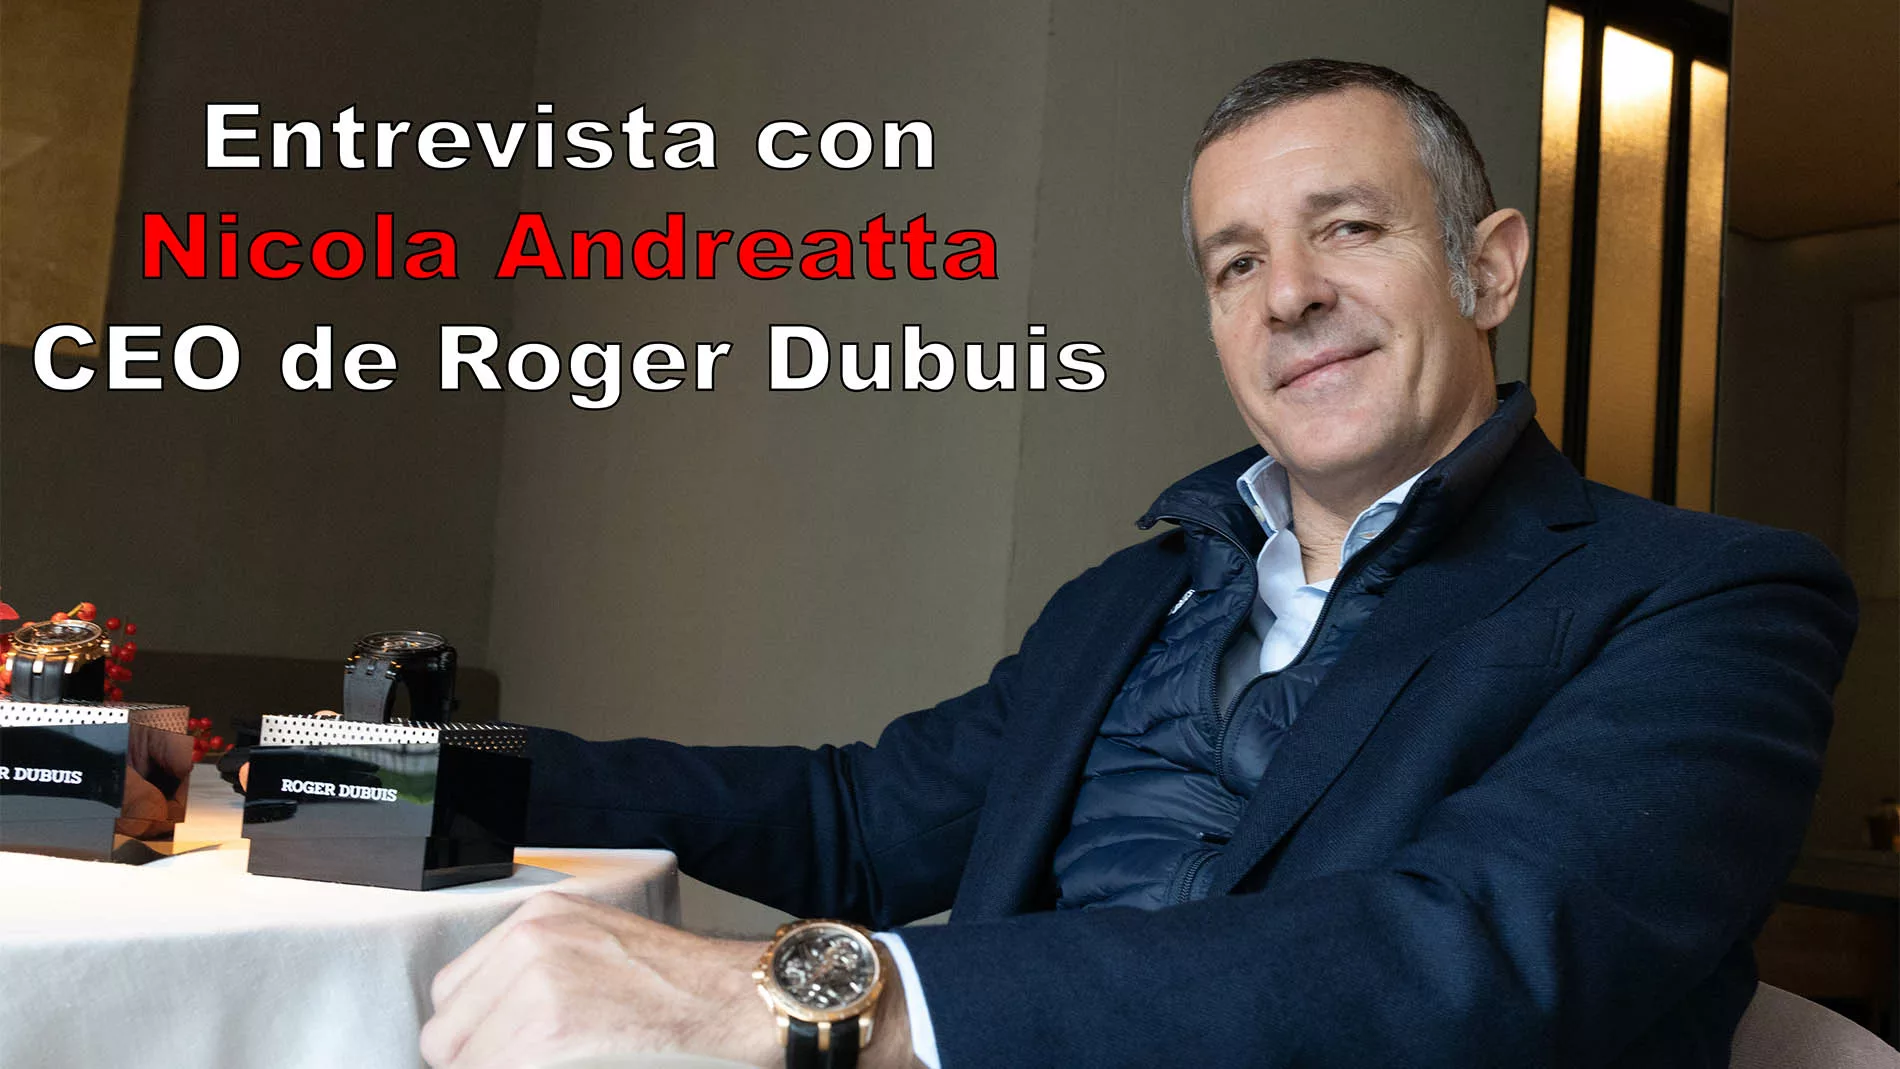 Entrevista Nicola Andreatta CEO Roger Dubuis portada